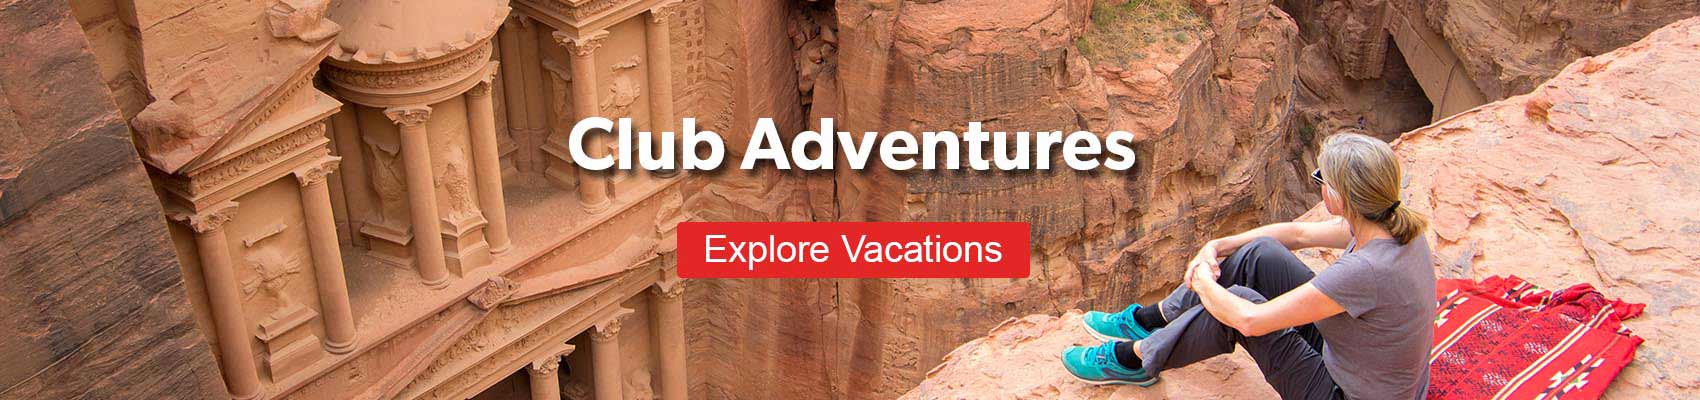 Explore Club Adventure Vacations